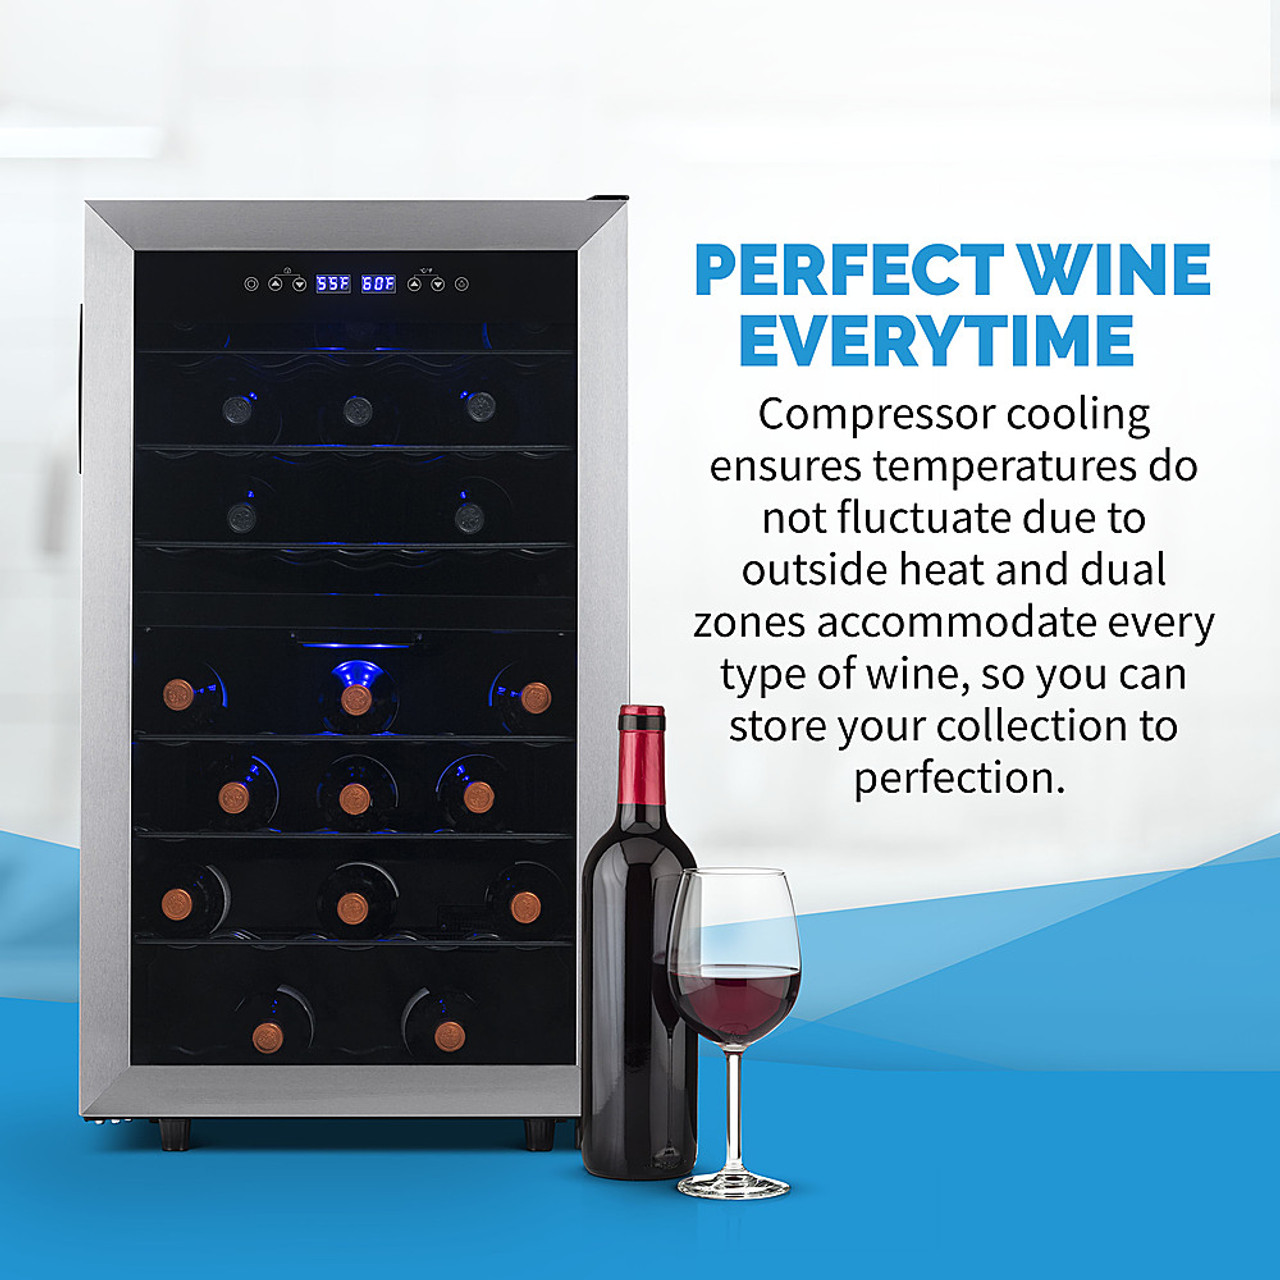 NewAir Freestanding 43 Bottle Dual Zone Compressor Wine Fridge in Stainless Steel - Stainless steel